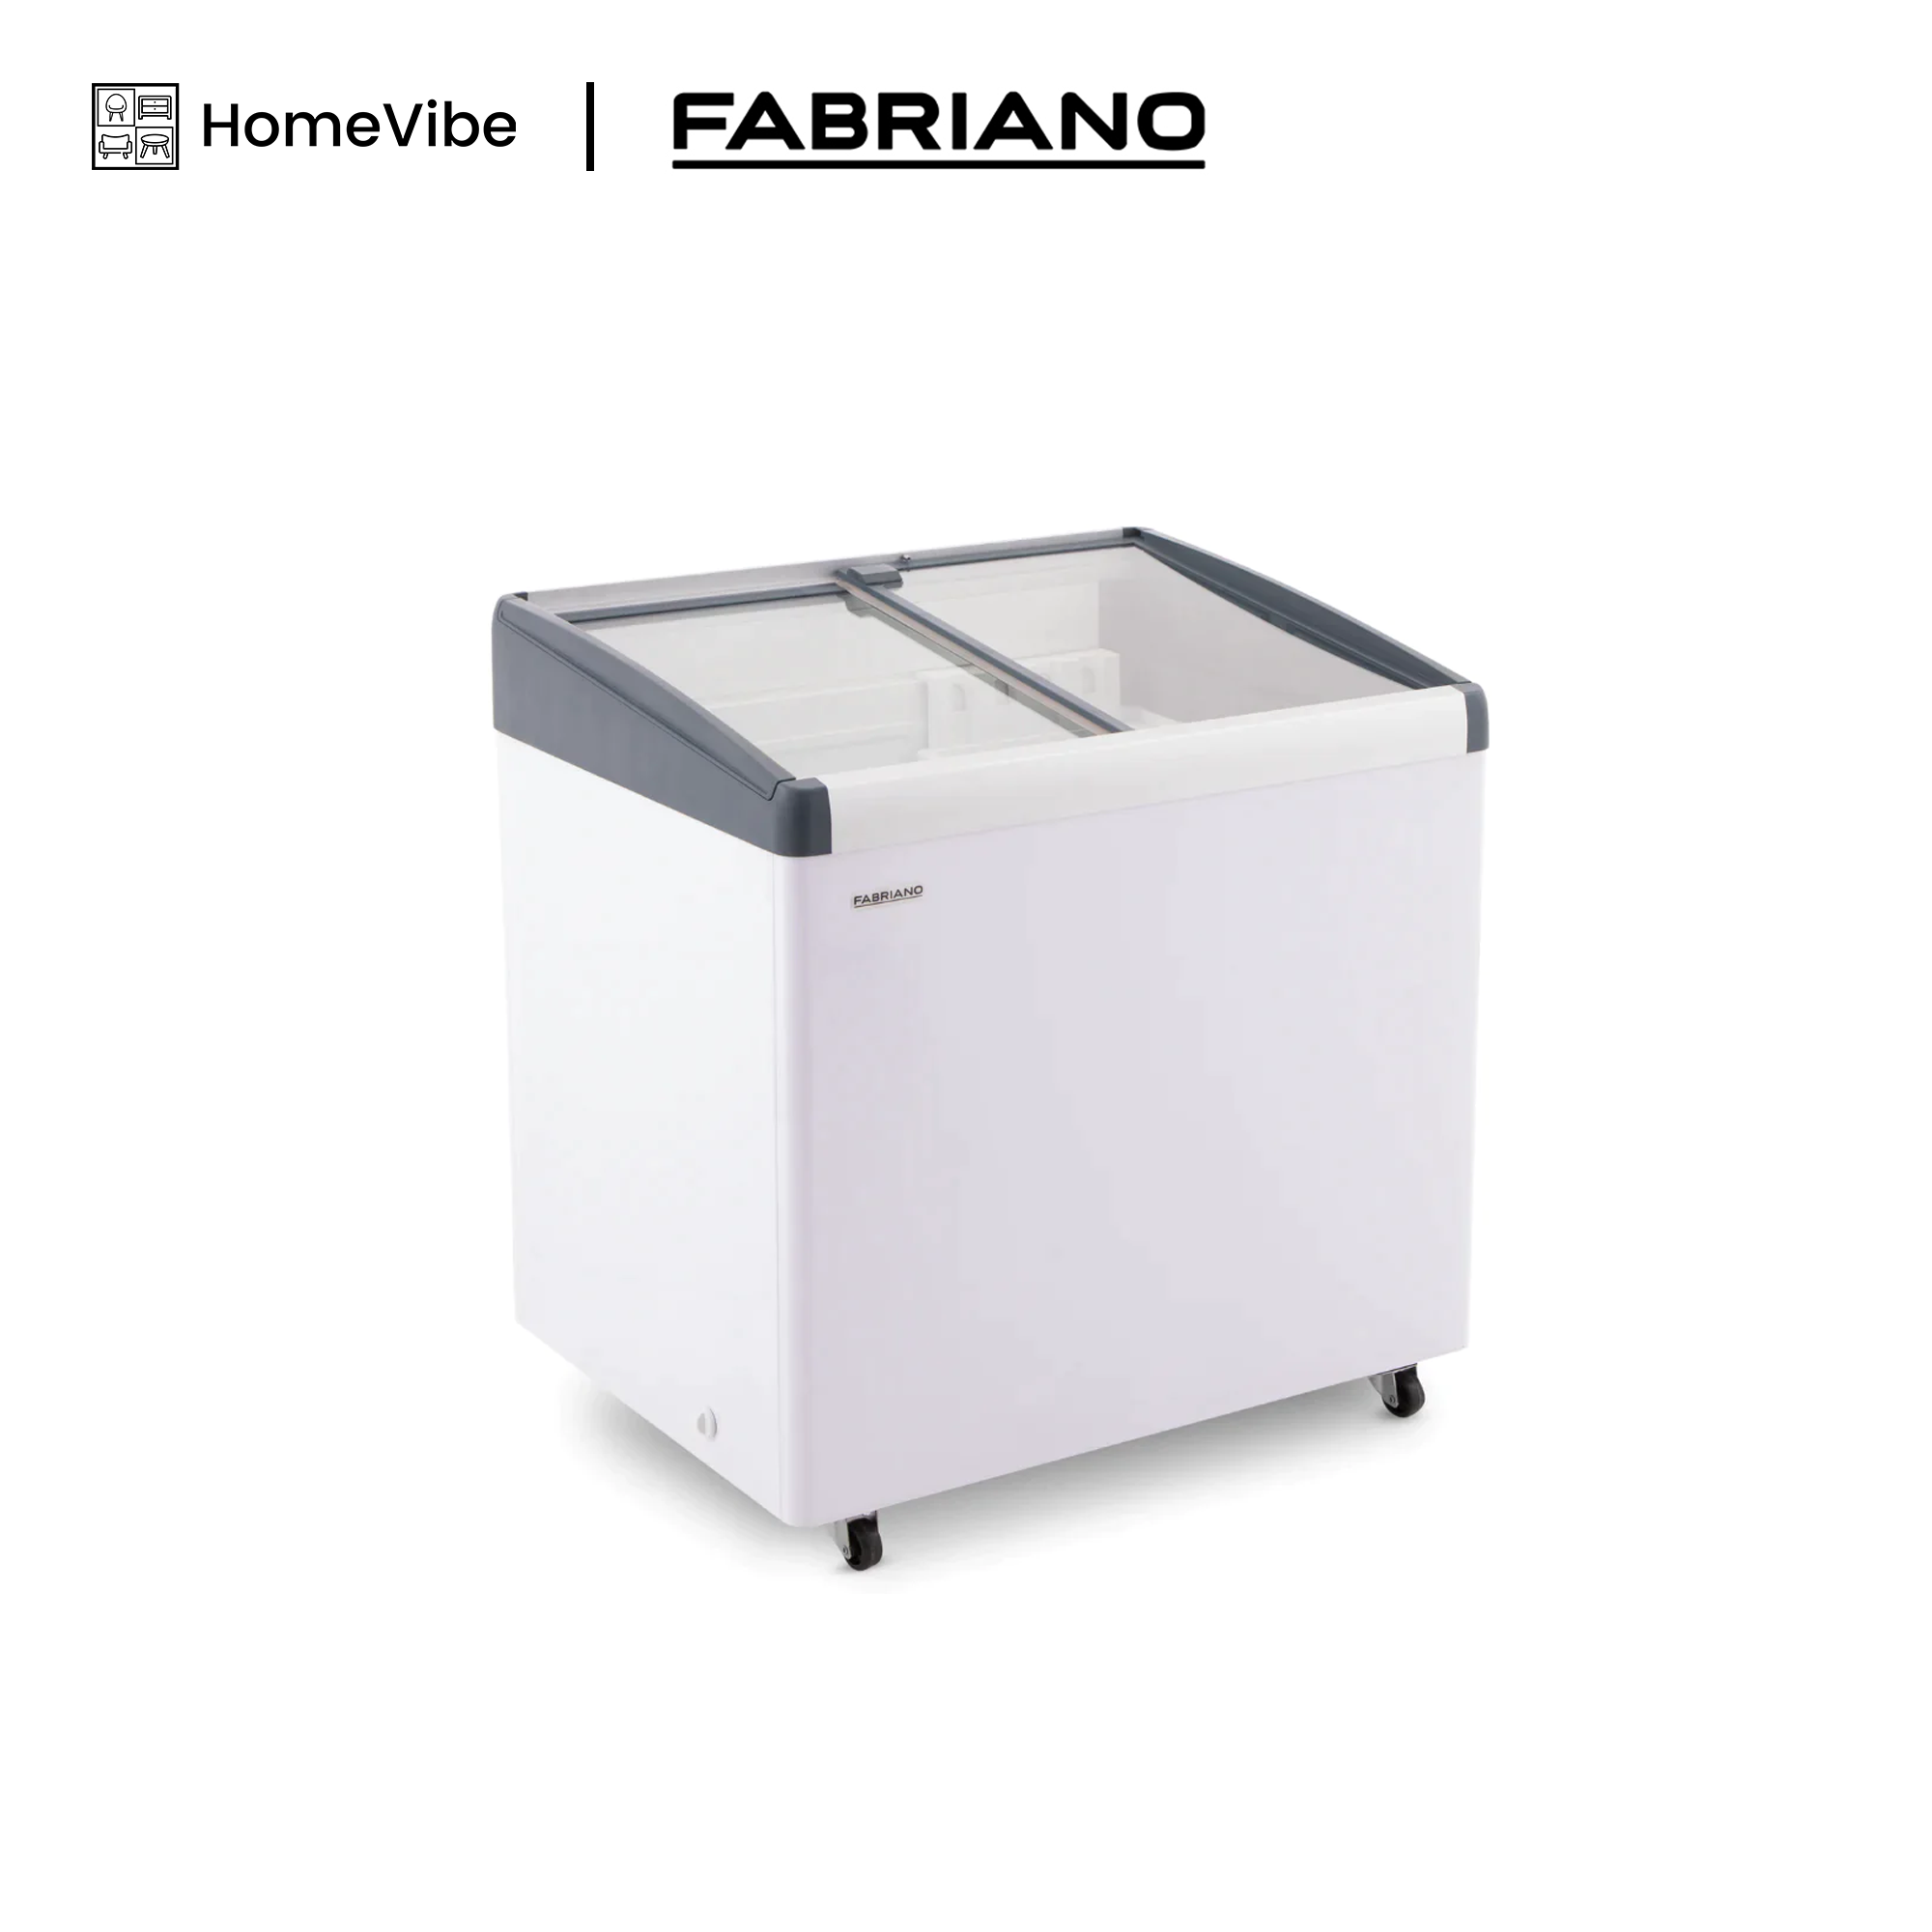 Fabriano 7cuft Showcase Chest Freezer FGTC07SG